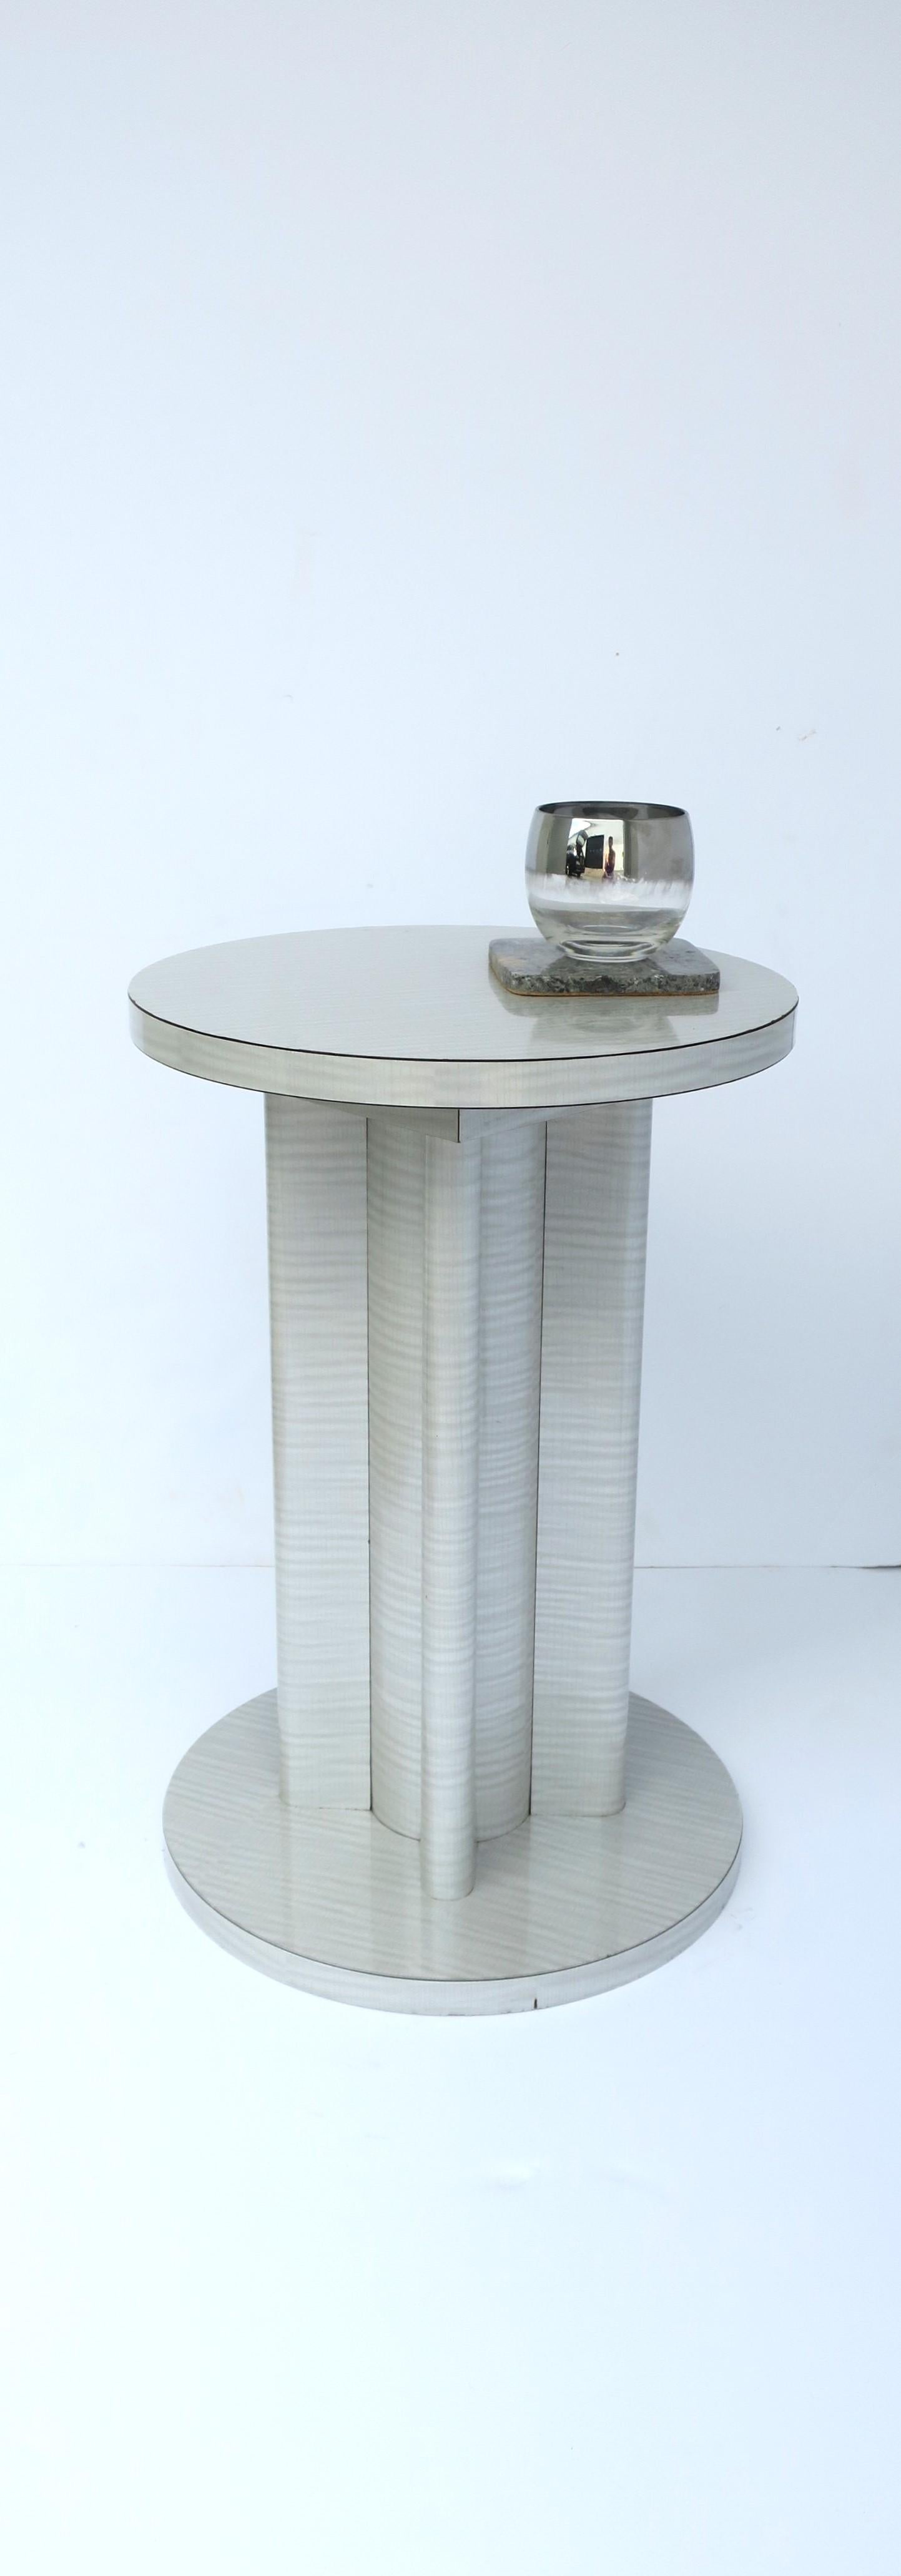 Art Deco Revival Modern Drinks Side Gueridon Tisch Silber Grau, ca. 1970er Jahre (Art déco) im Angebot